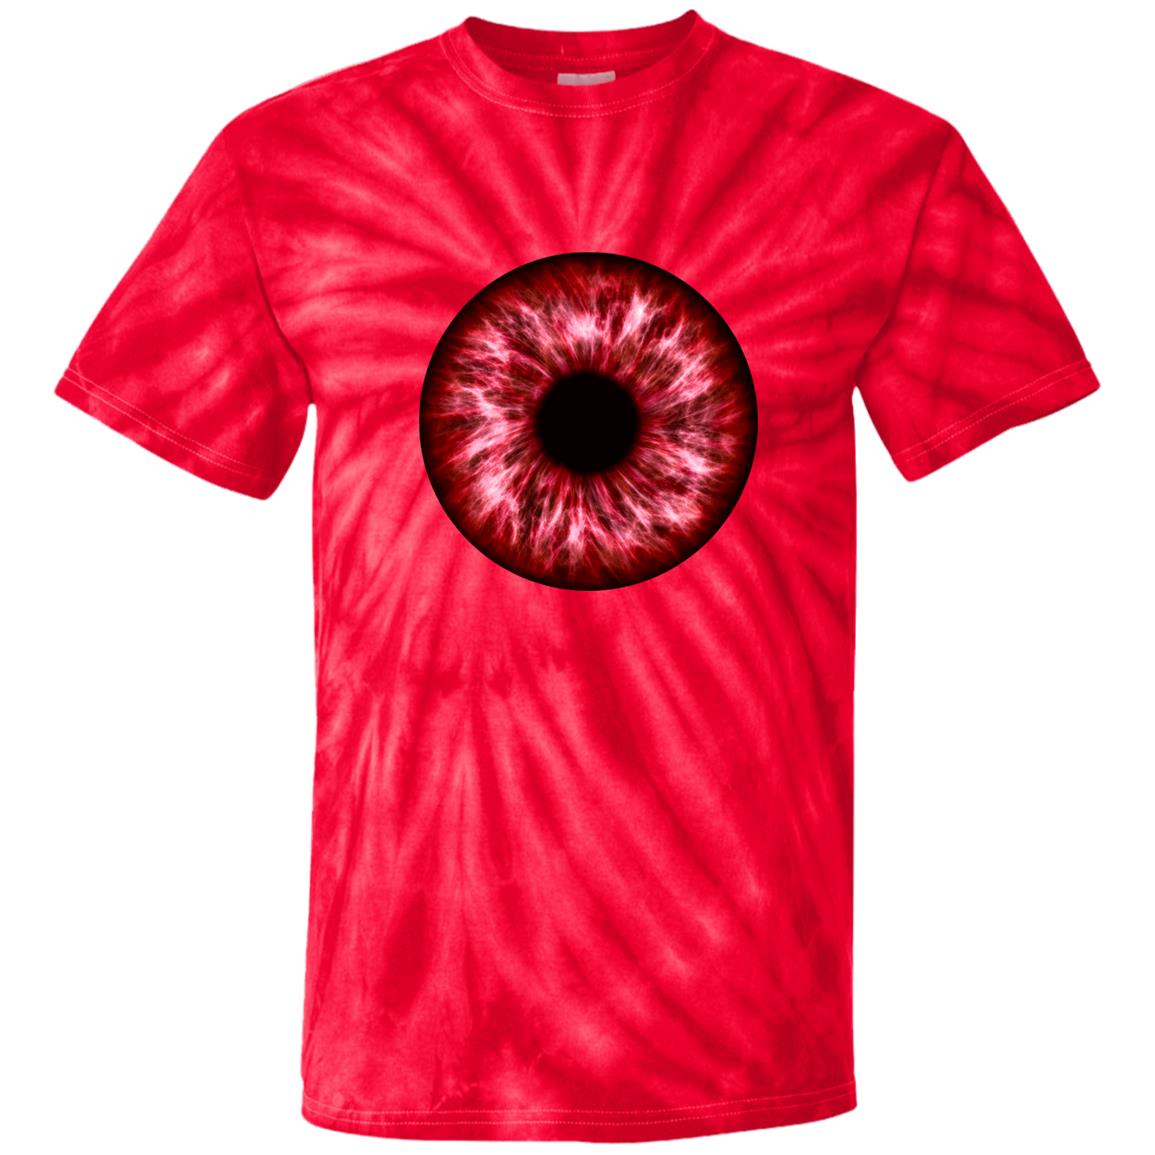 RED EYE Youth Tie Dye T-Shirt